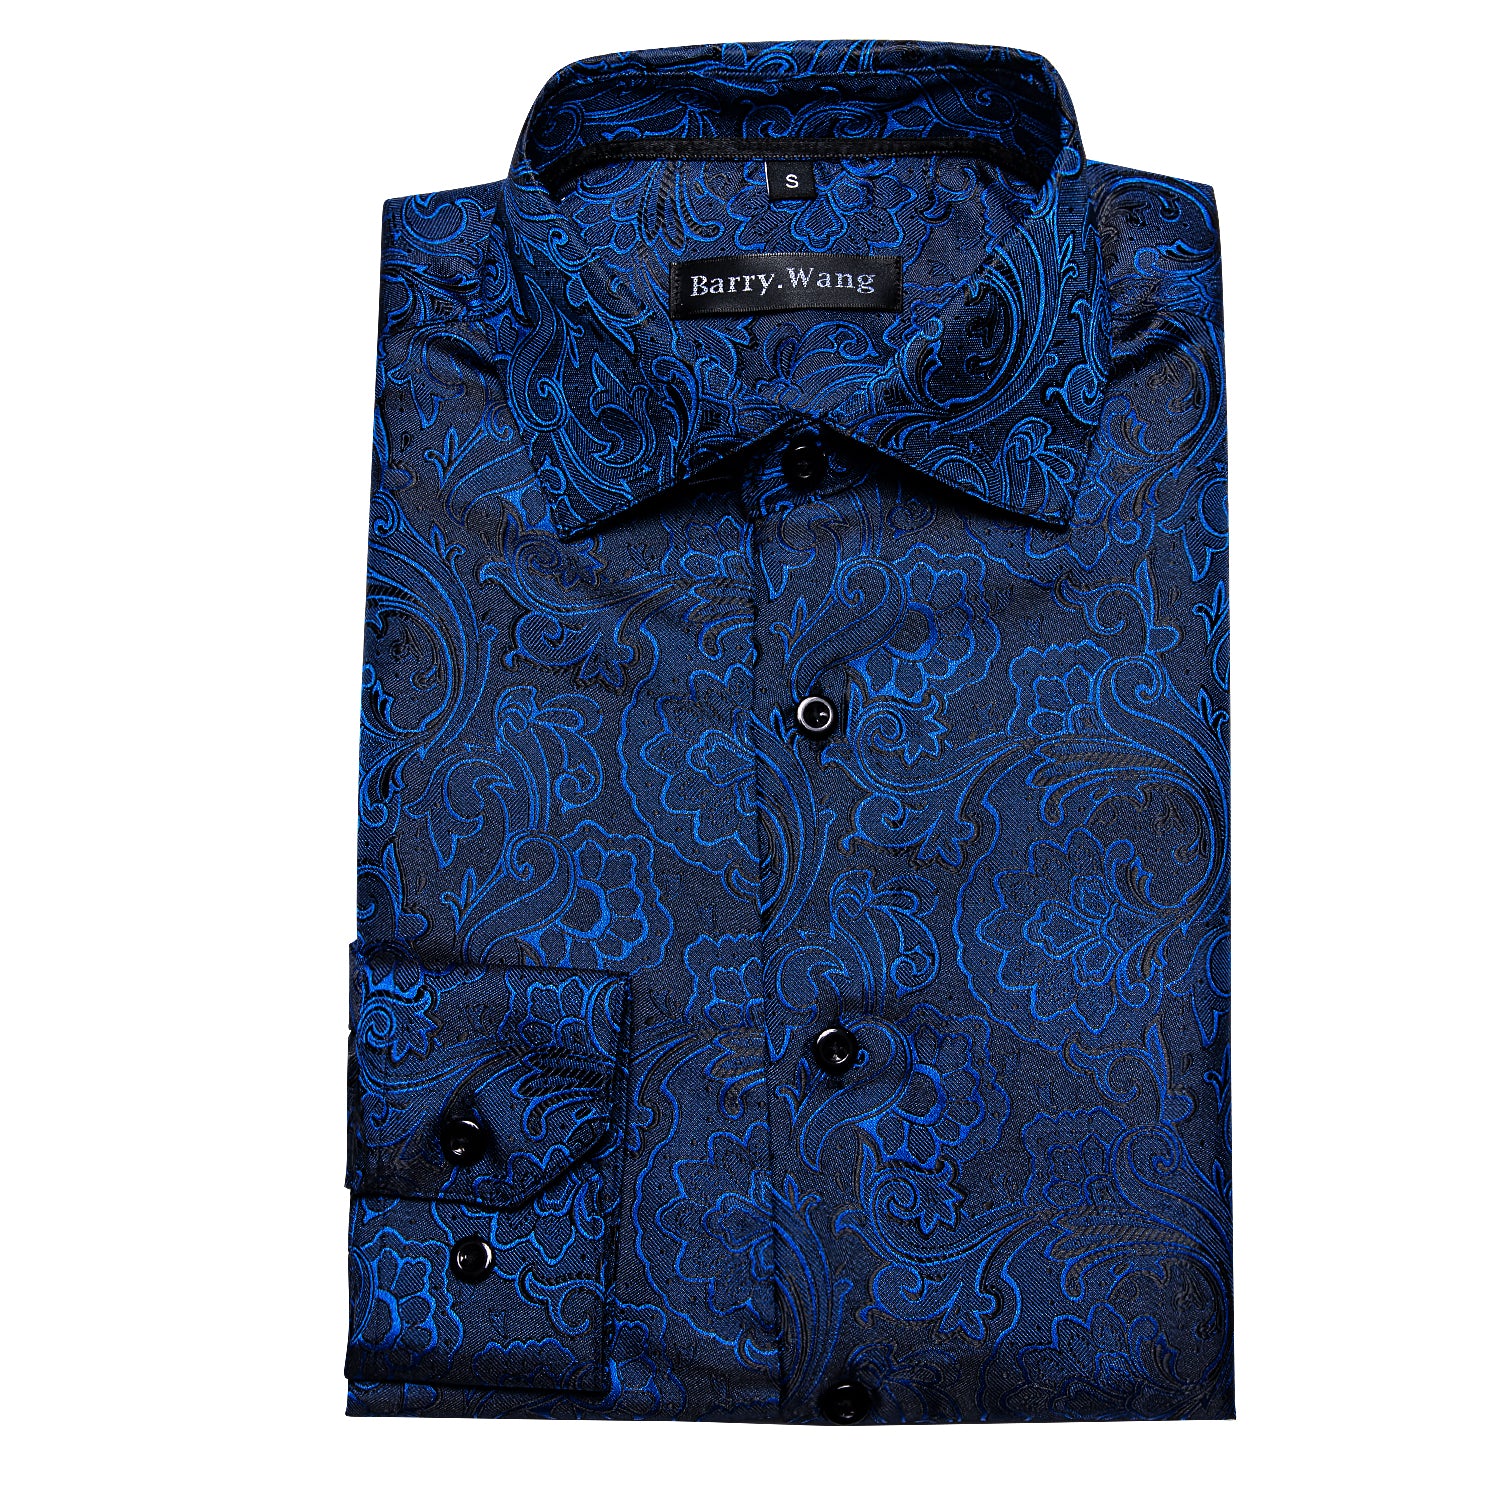 Barry.wang Blue Black Paisley Silk Shirt